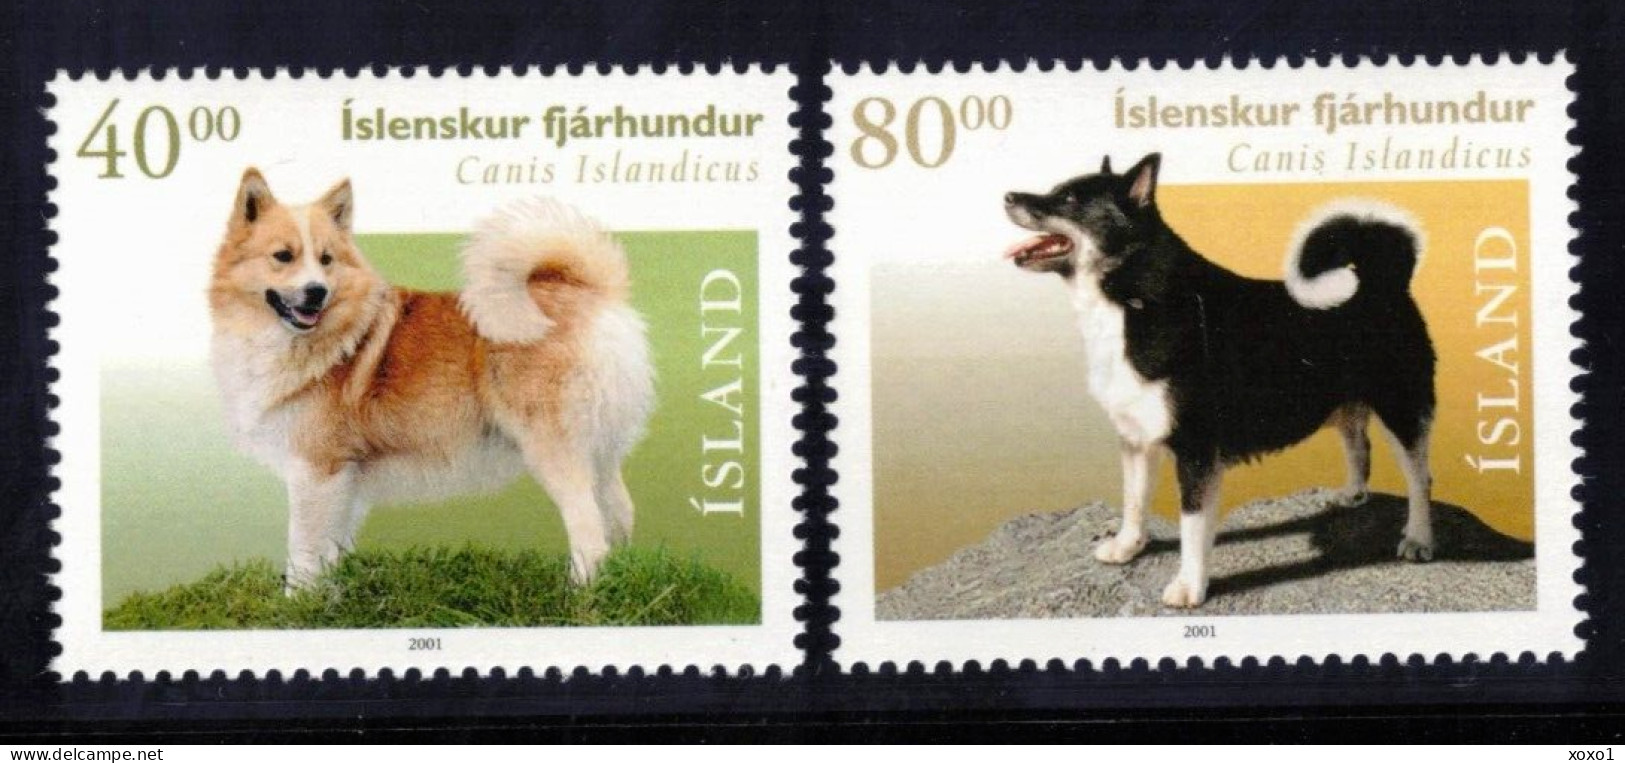 Iceland 2001 MiNr. 977 - 978 Island Mammals, Pets, Dogs, Icelandic Spitz 2v MNH** 4.00 € - Hunde